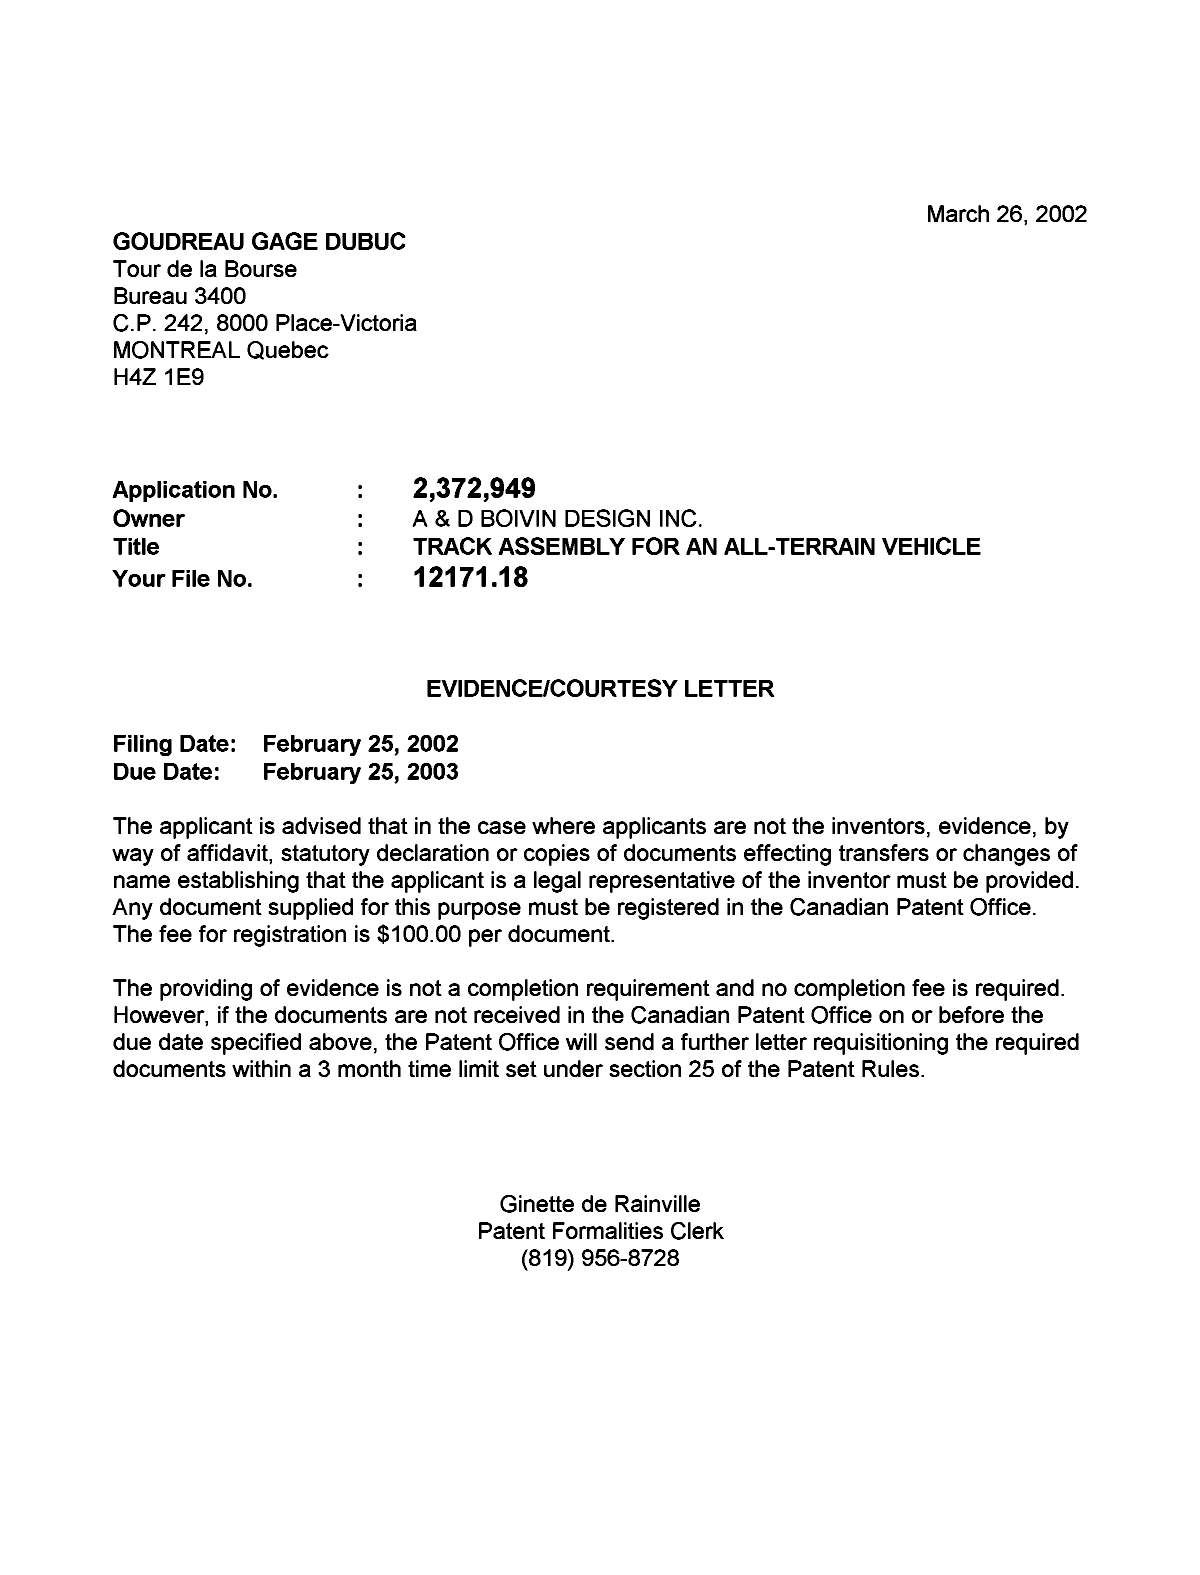 Canadian Patent Document 2372949. Correspondence 20020321. Image 1 of 1